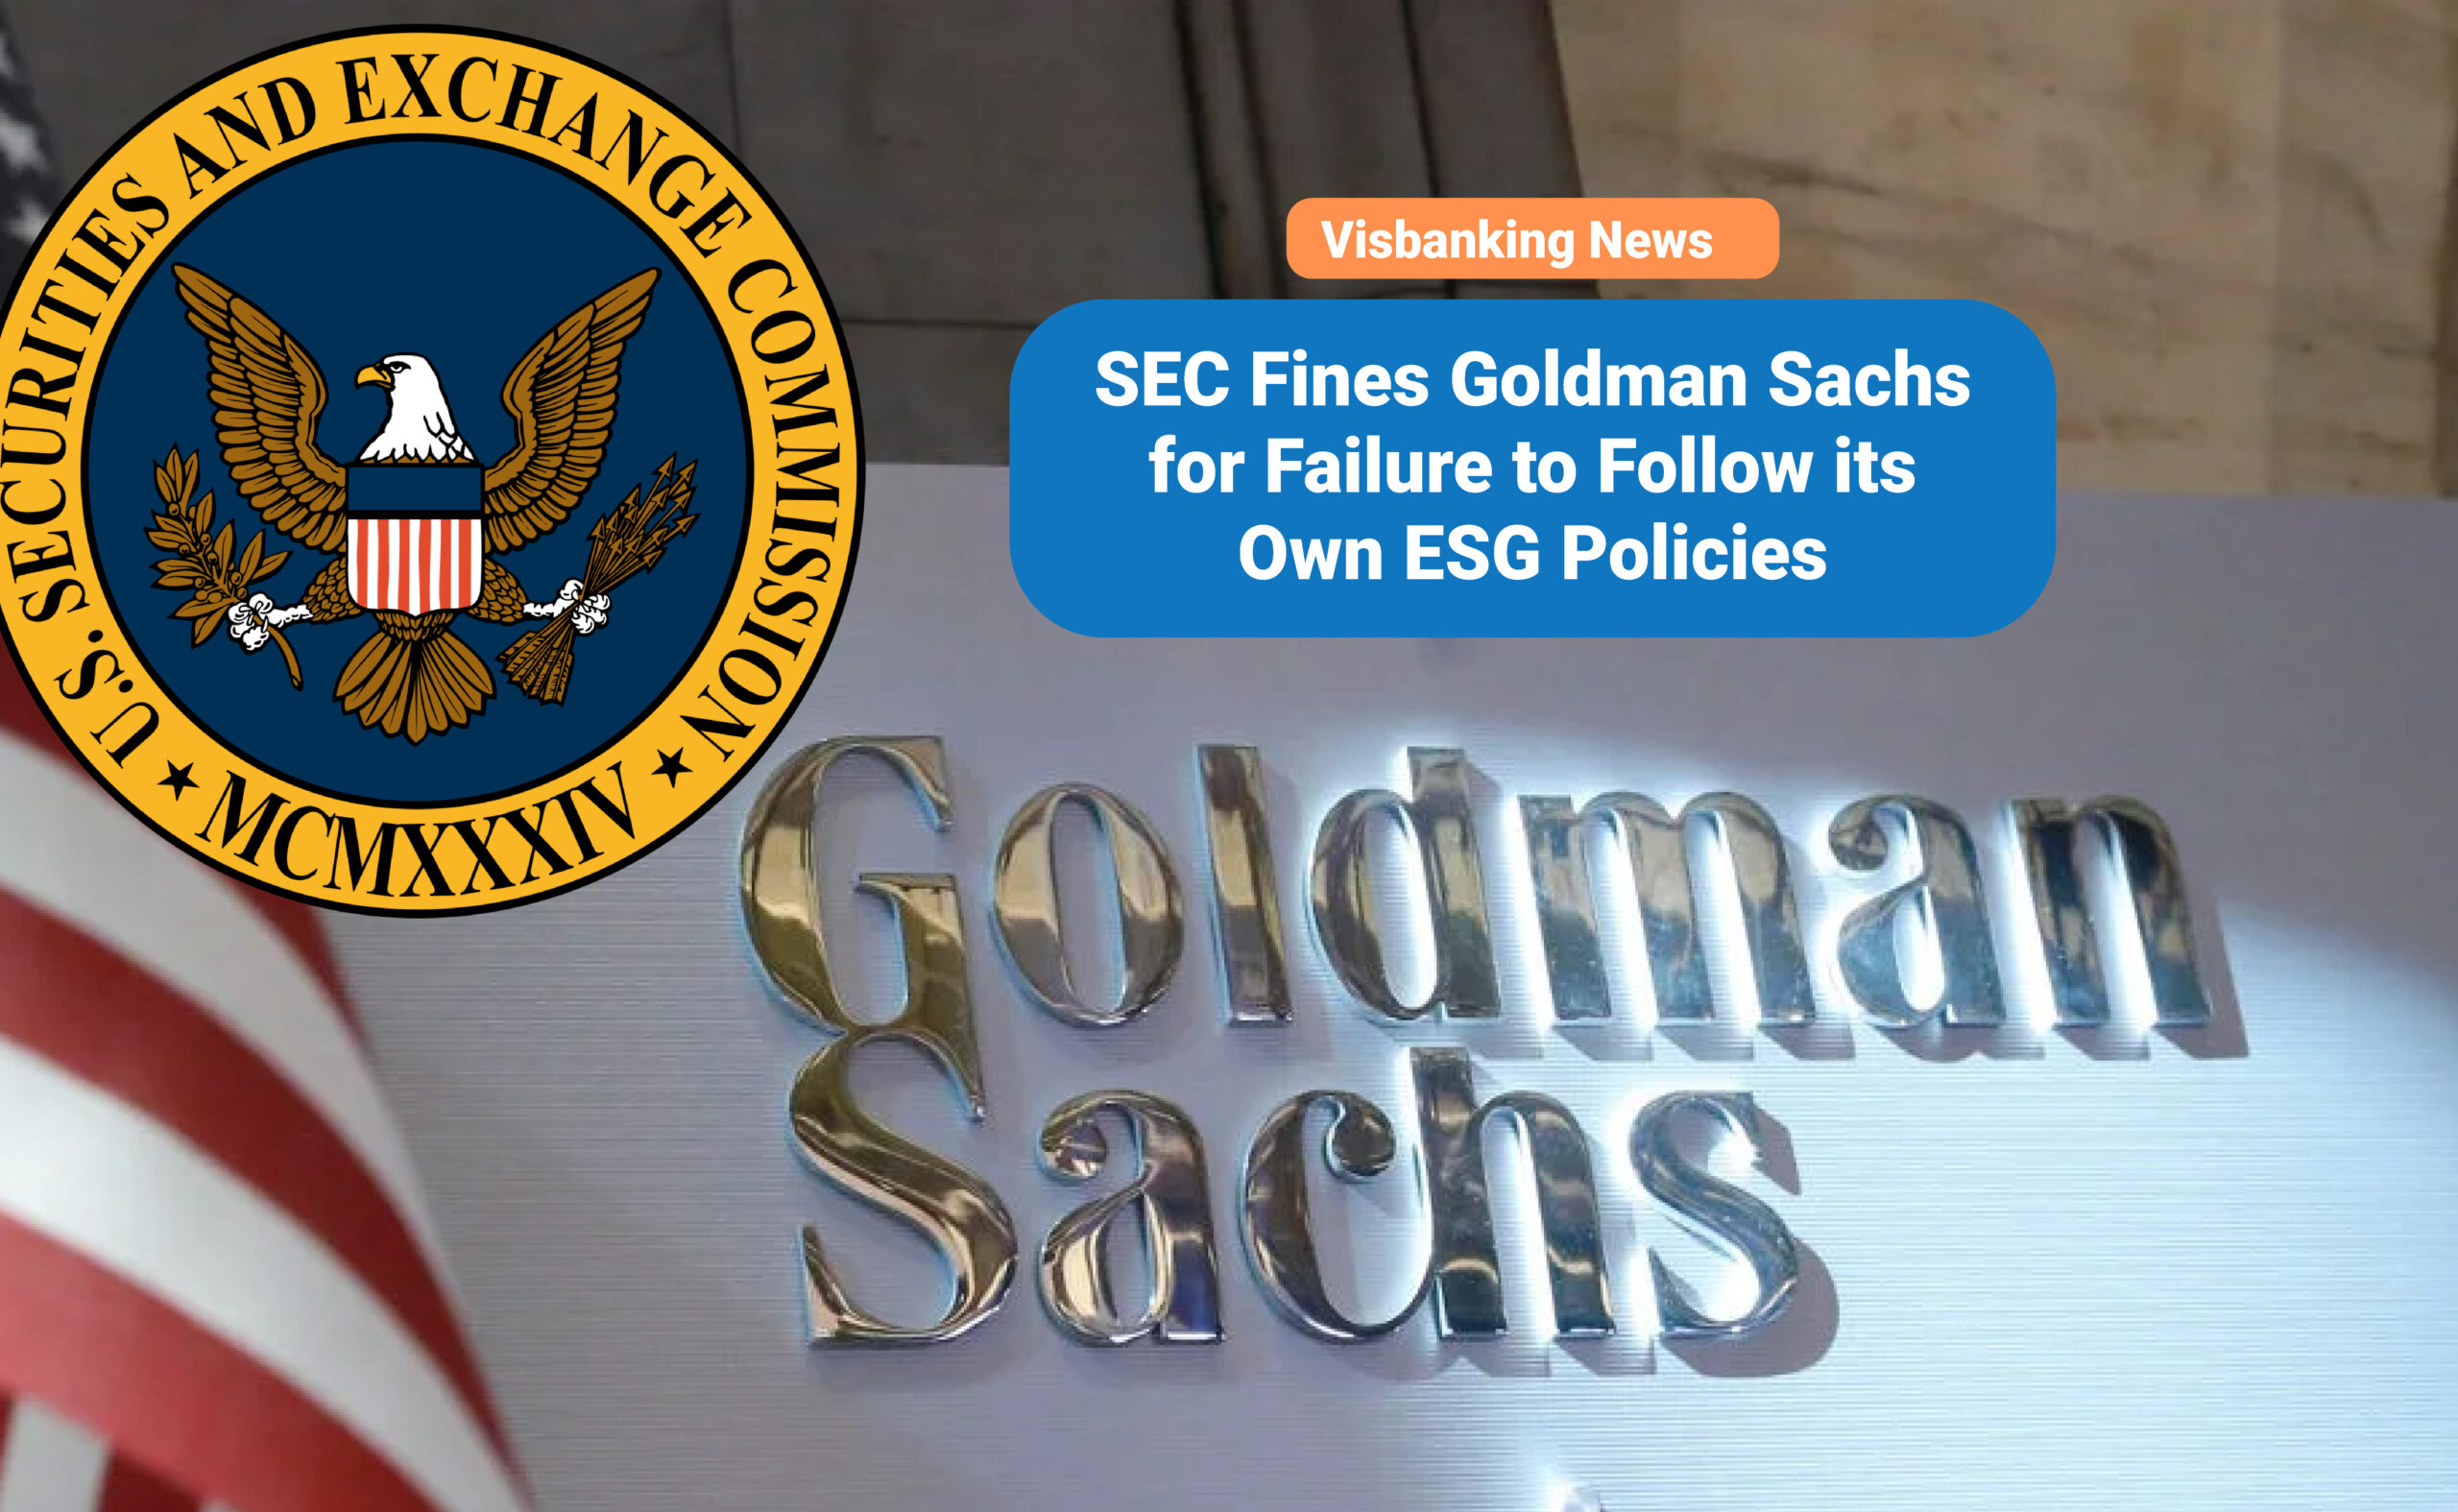 SEC Fines Goldman Sachs for Failure to Follow its Own ESG Policies